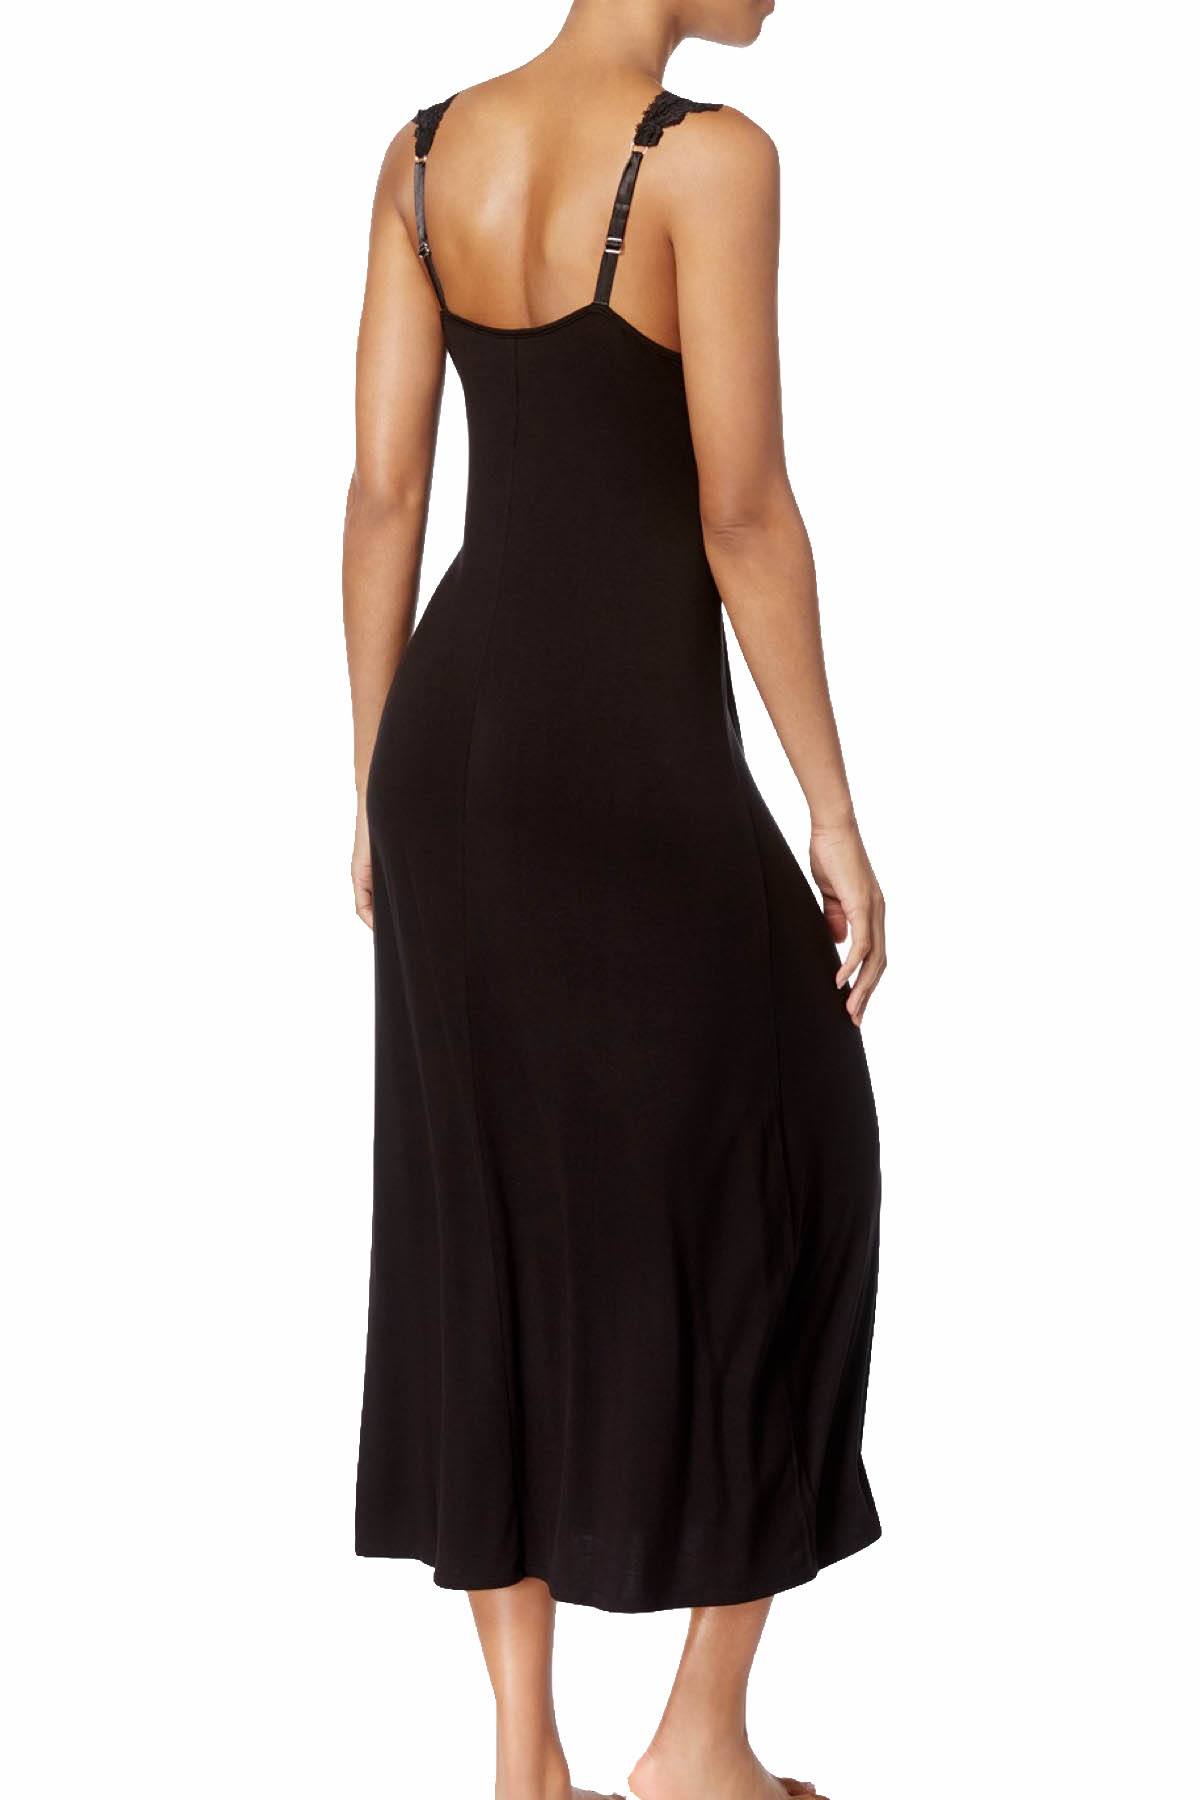 Thalia Sodi Intimates Deep-Black Knit Lace-Trimmed Nightgown